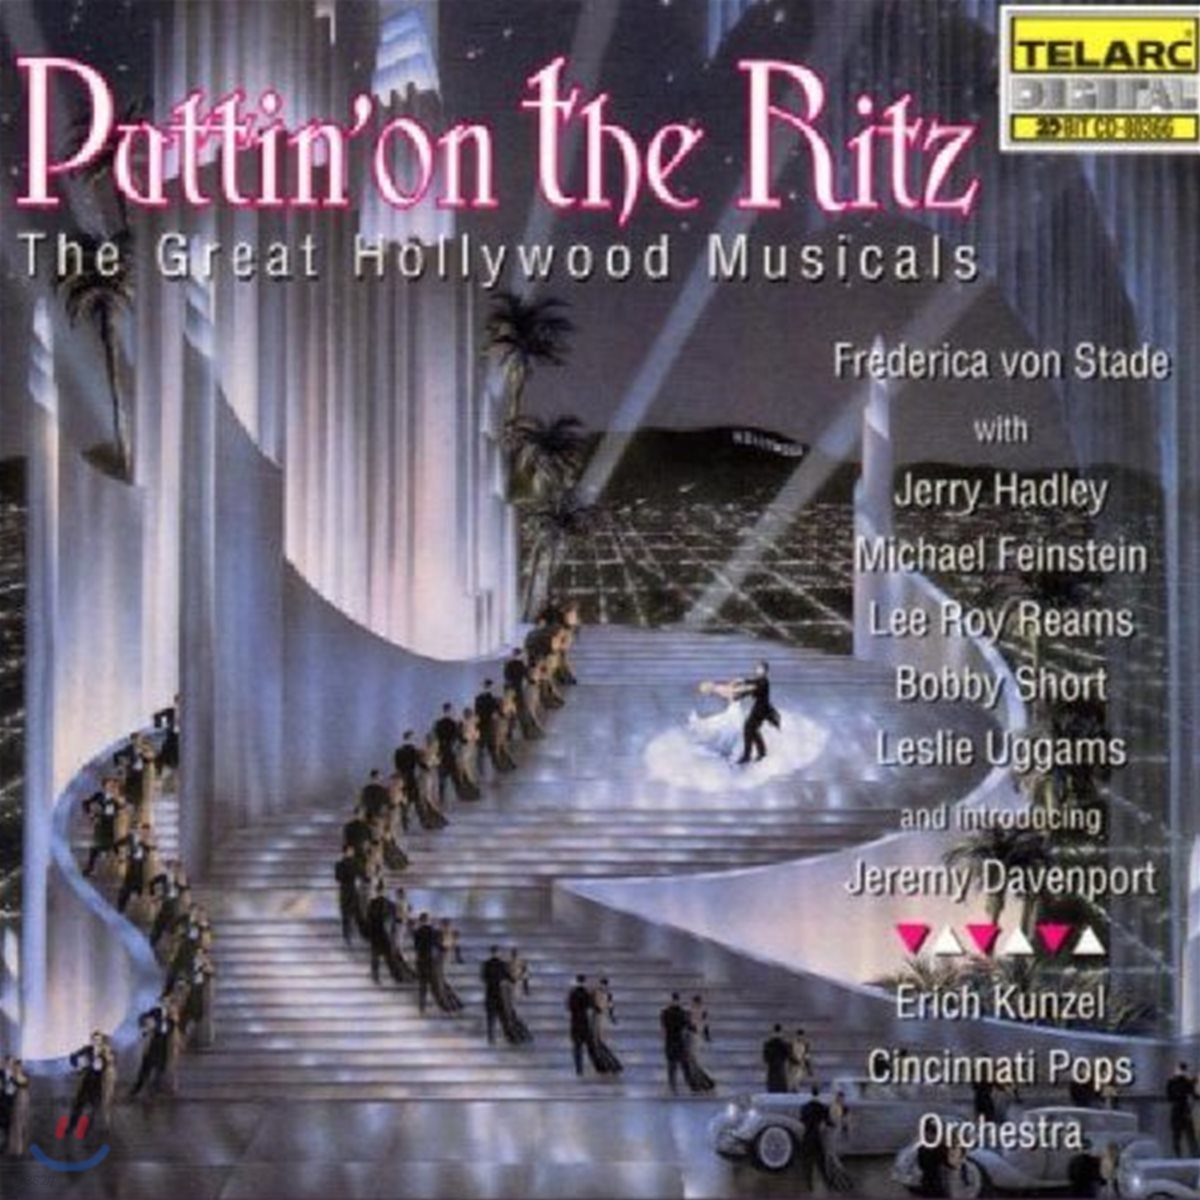 Erich Kunzel 푸팅 온 더 리츠 - 그레이트 헐리우드 뮤지컬 (Puttin' on the Ritz - The Great Hollywood Musicals) 에리히 쿤젤, 신시내티 팝스 오케스트라